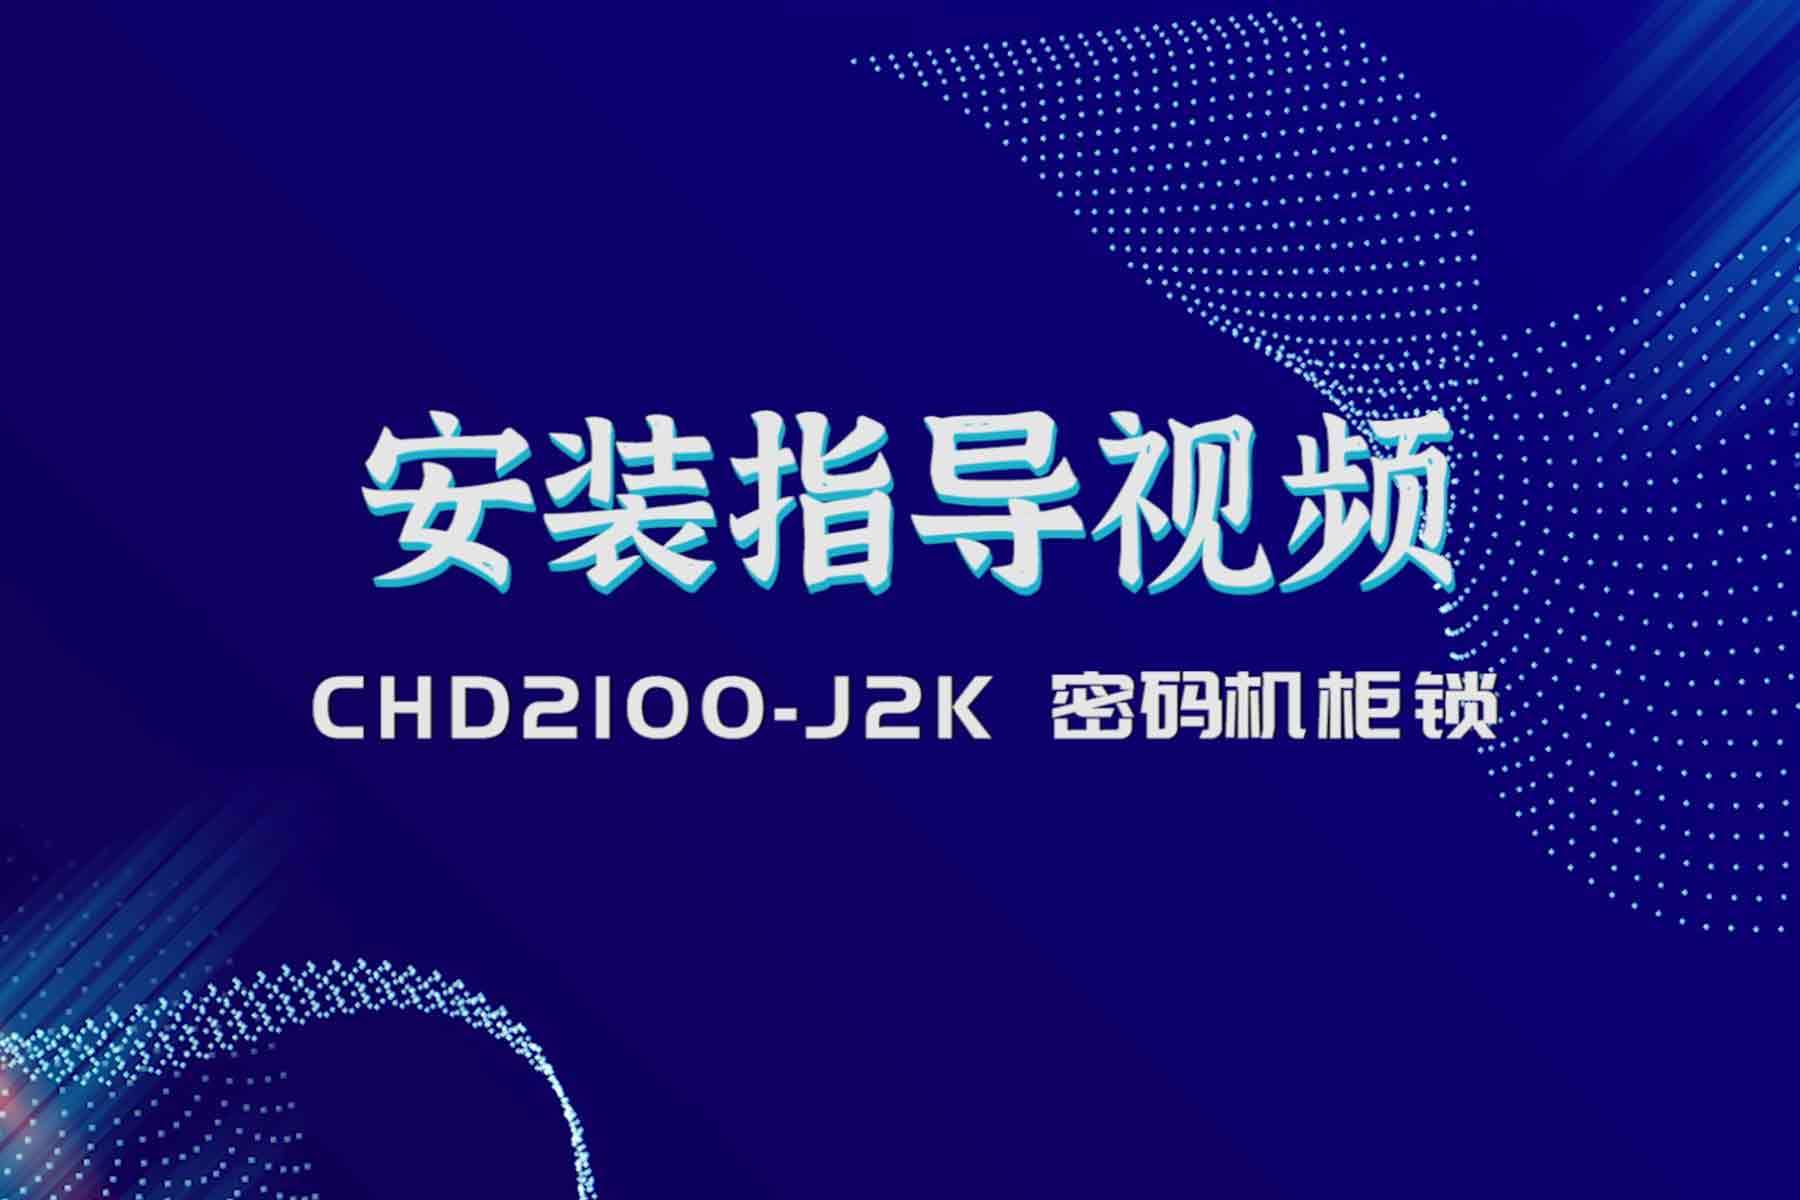 2100-J2K installation guide video